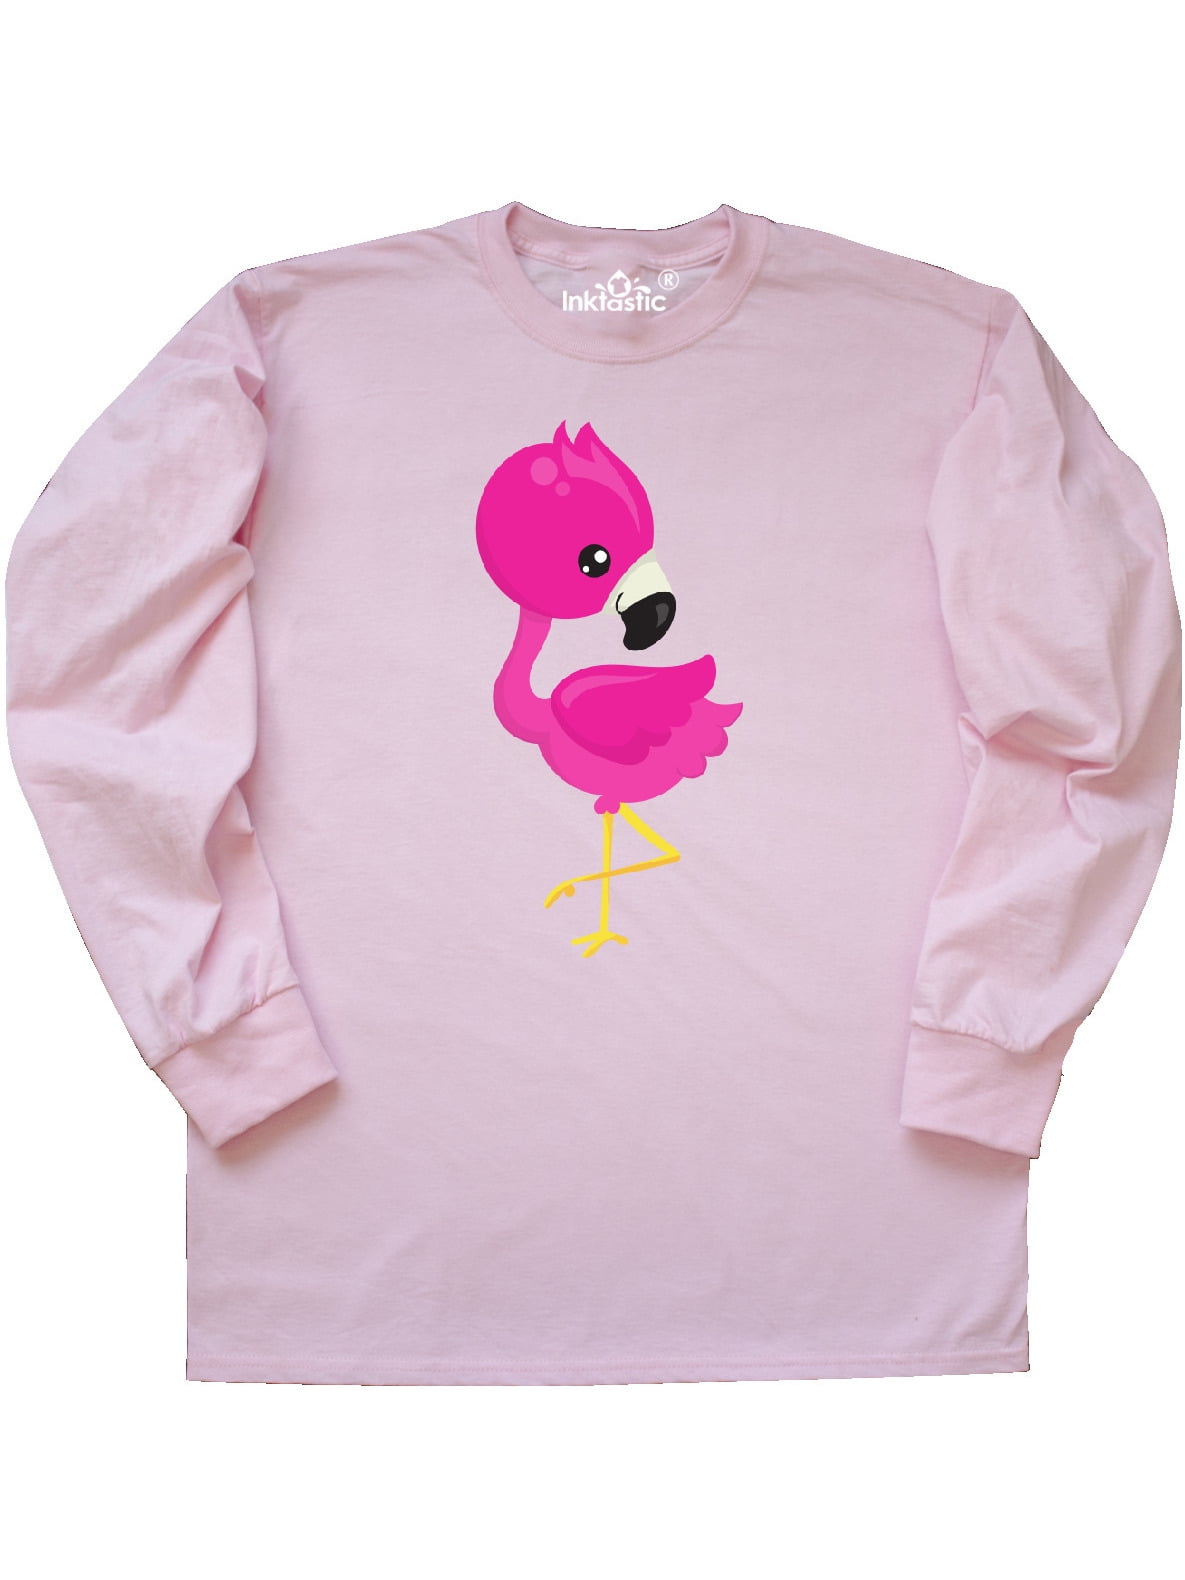 pink flamingo baby clothes